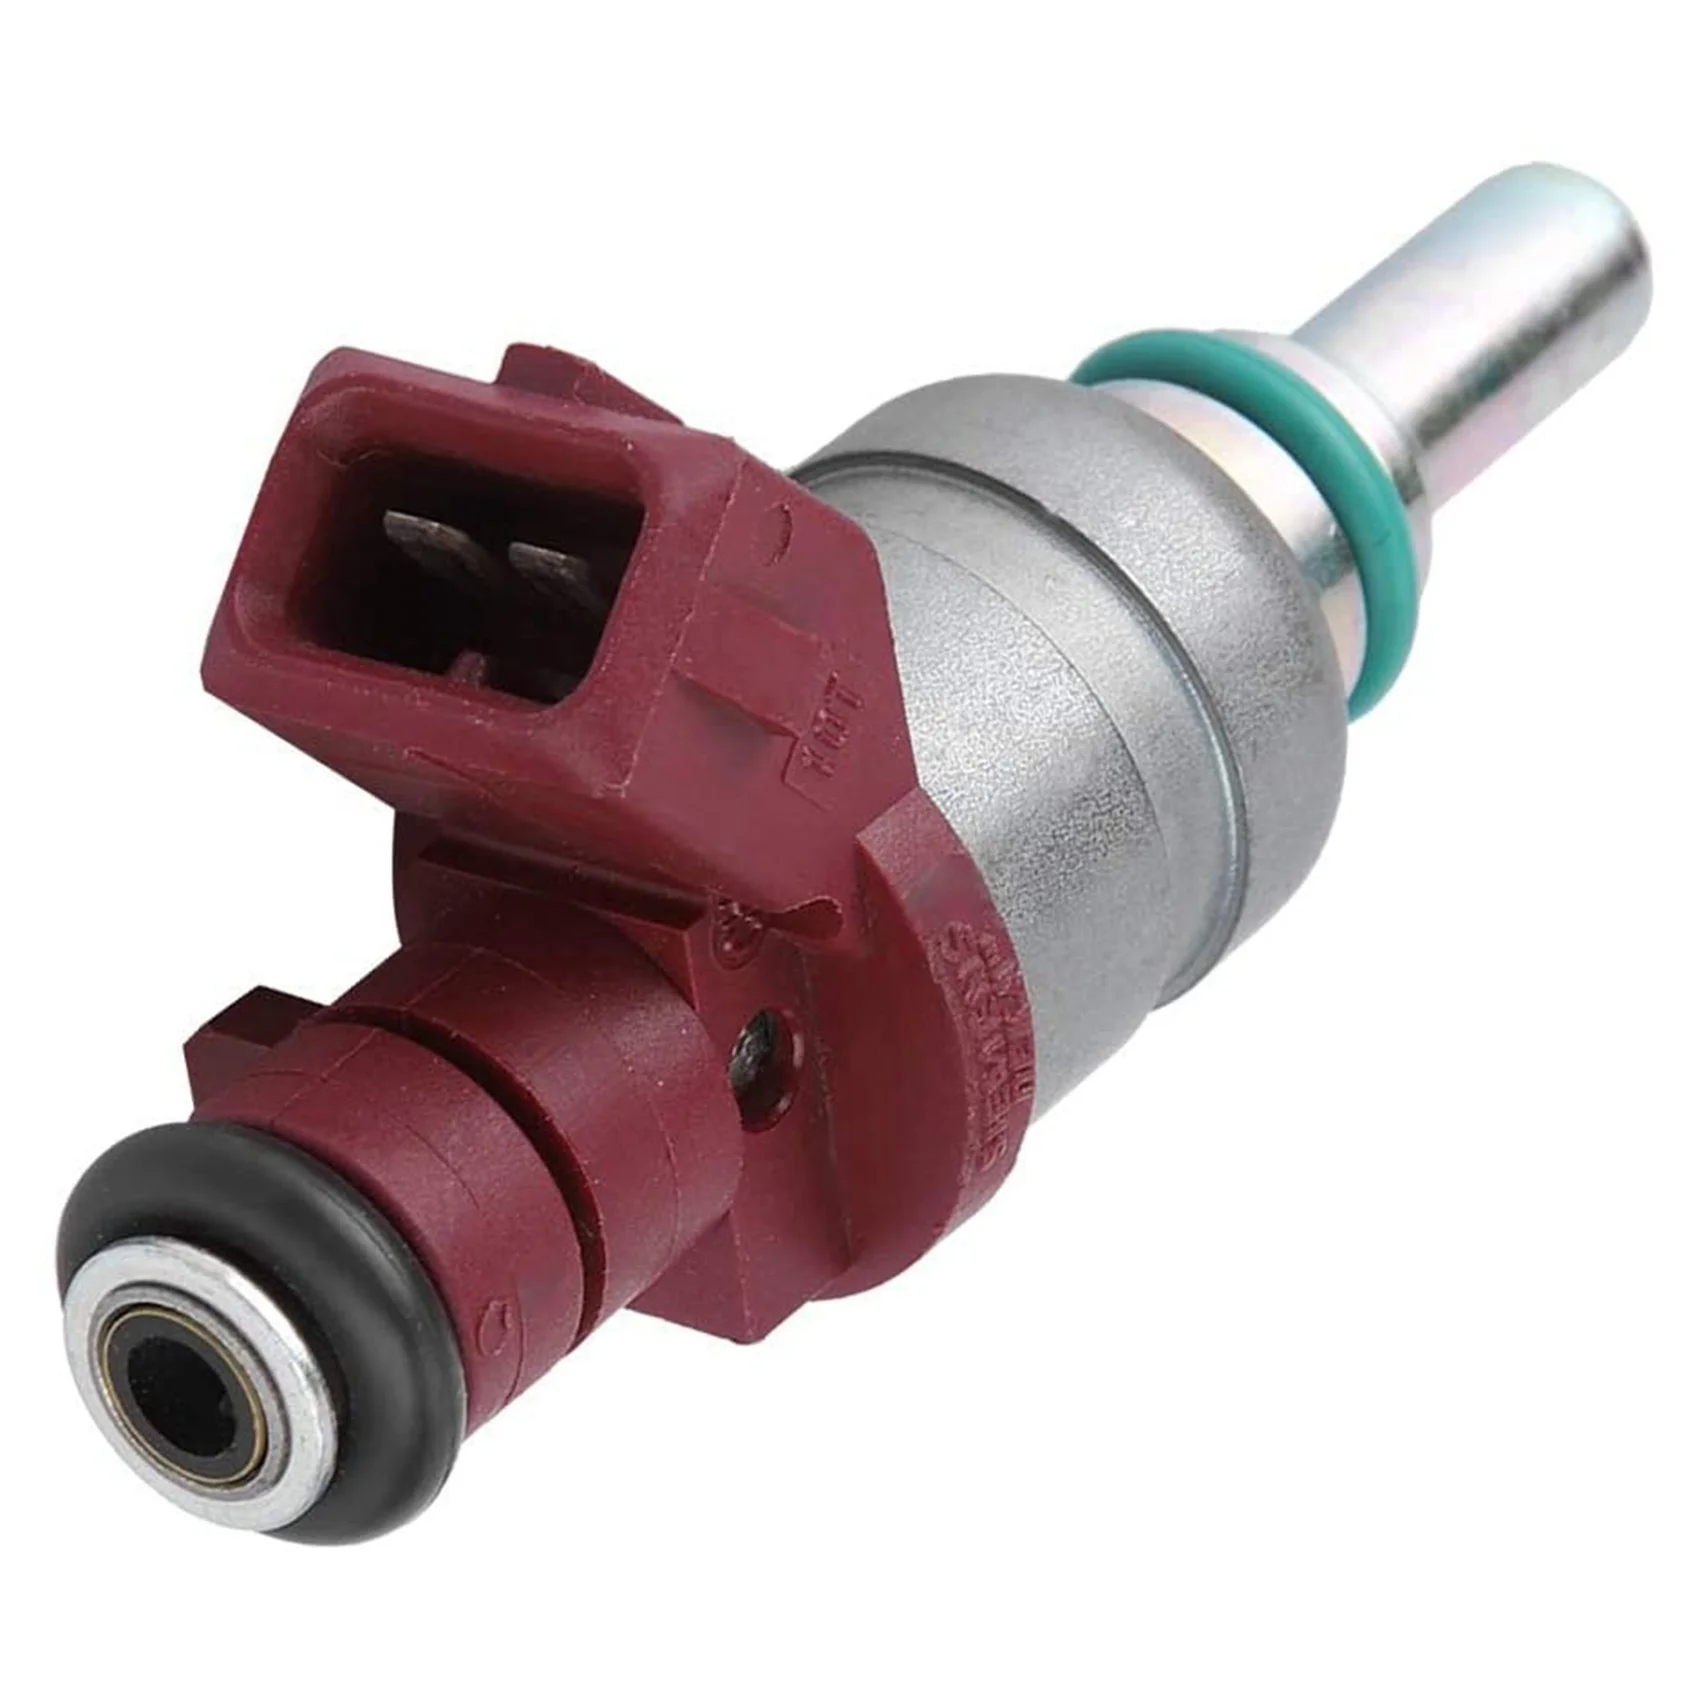 

Fuel Injector Nozzle Adapter A2710780023 for Mercedes-Benz W203 C180 1.8T Car Accessories